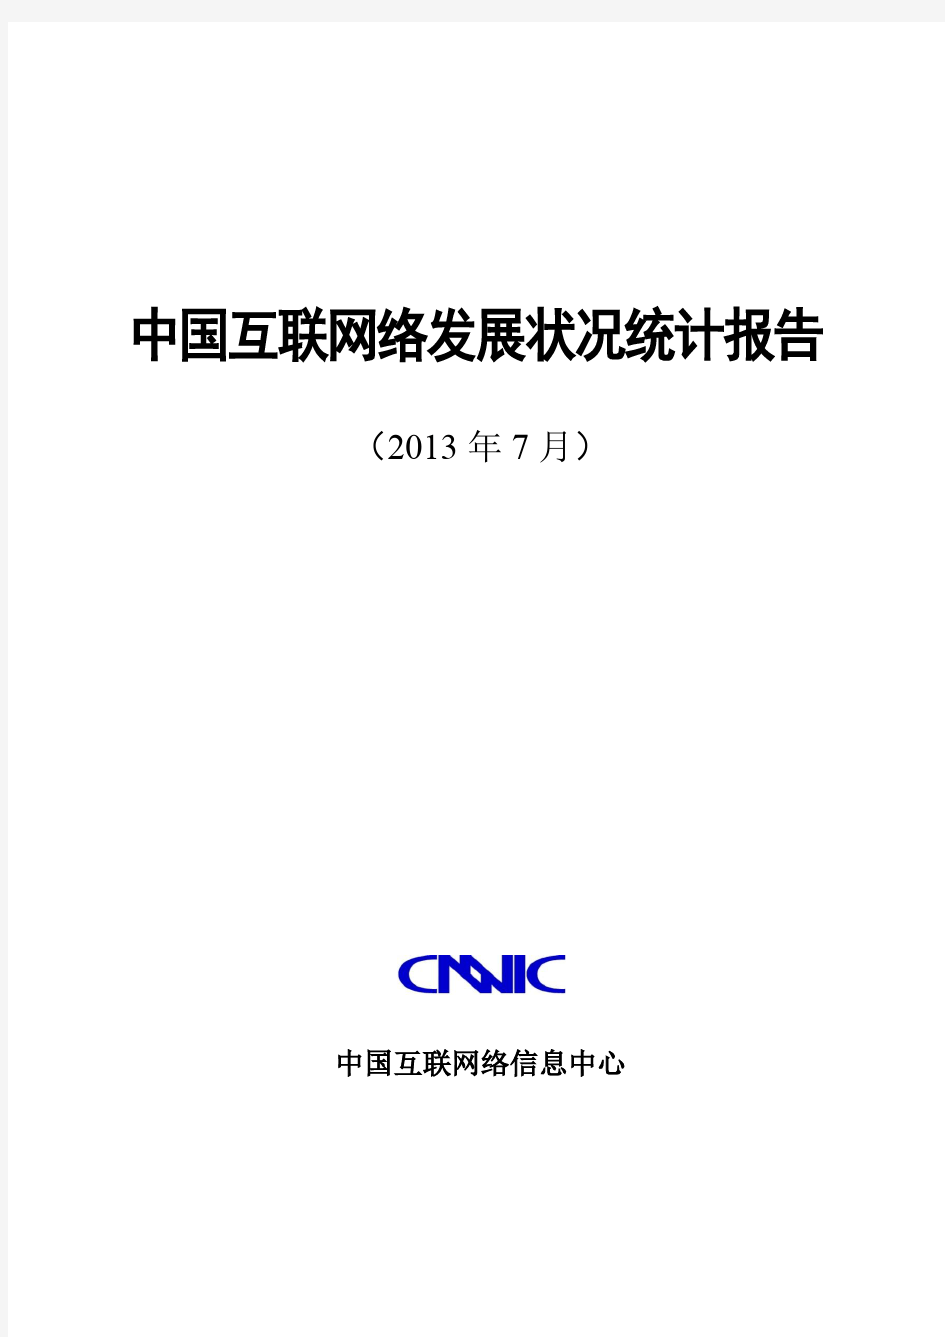 CNNIC：2013年第32次中国互联网发展状况统计报告